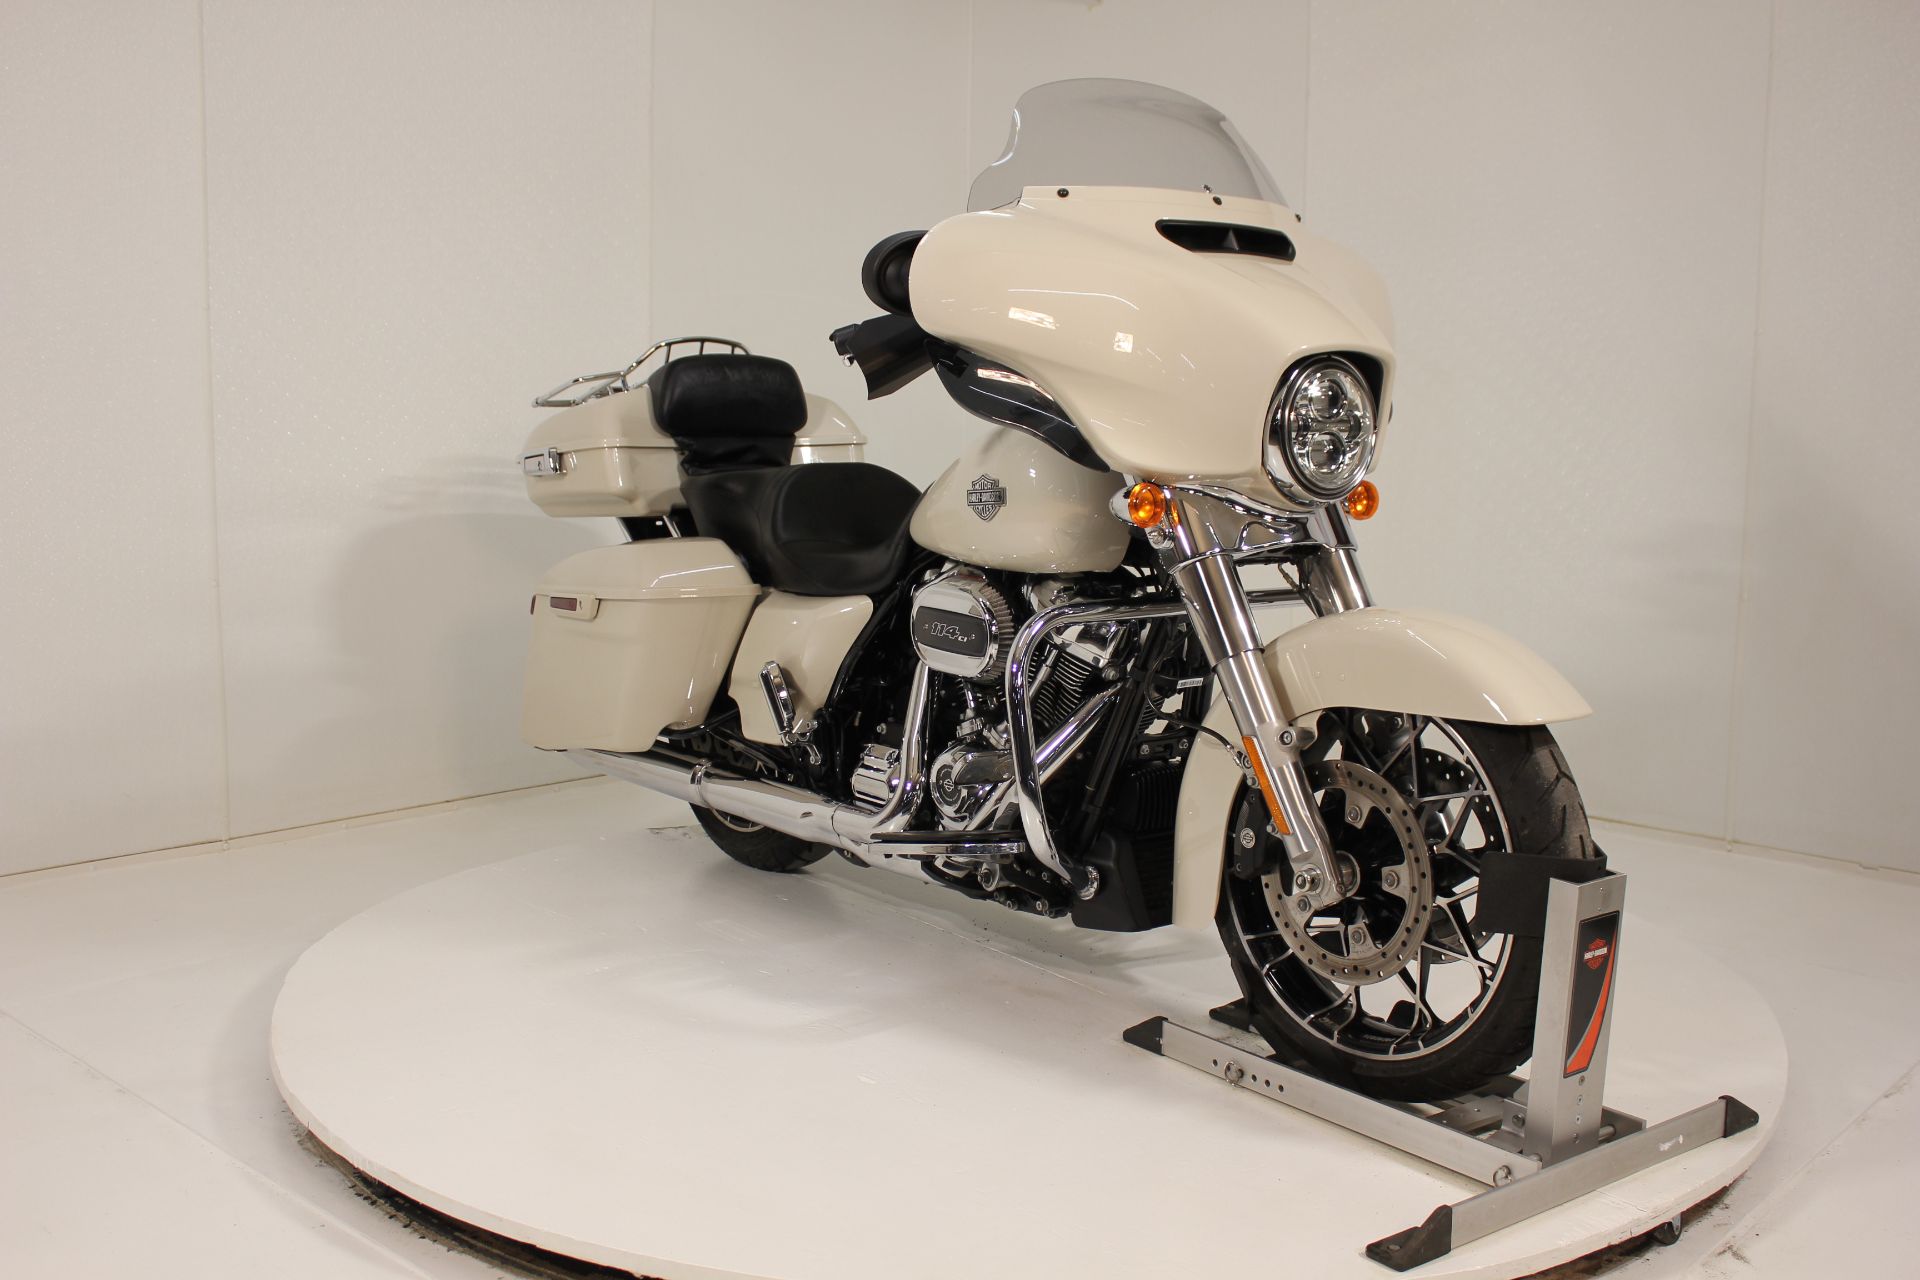 2022 Harley-Davidson Street Glide® Special in Pittsfield, Massachusetts - Photo 6